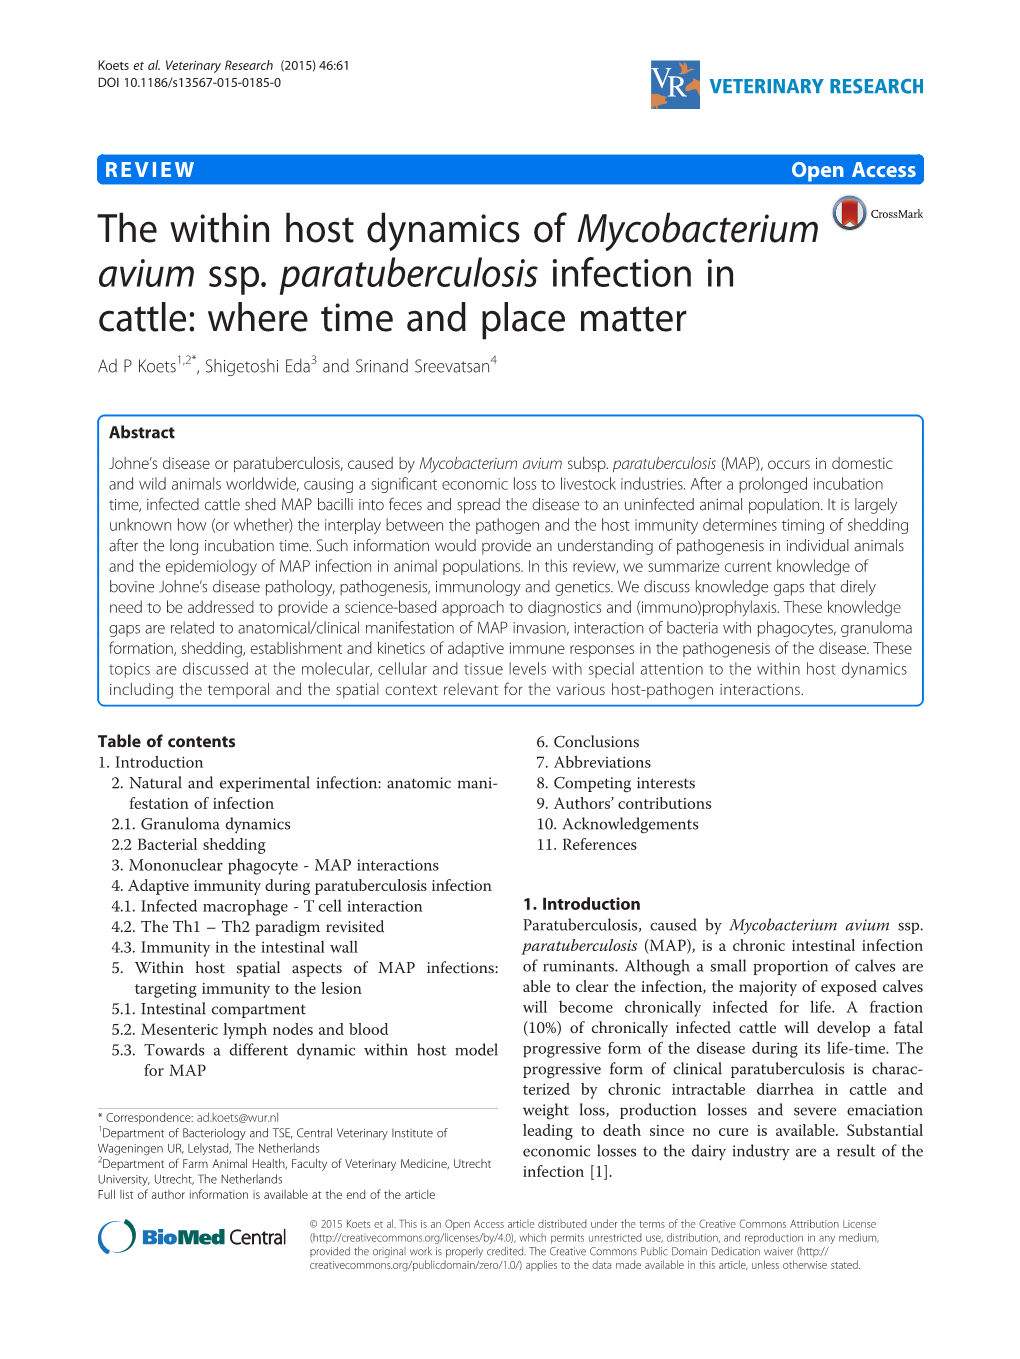 The Within Host Dynamics of Mycobacterium Avium Ssp